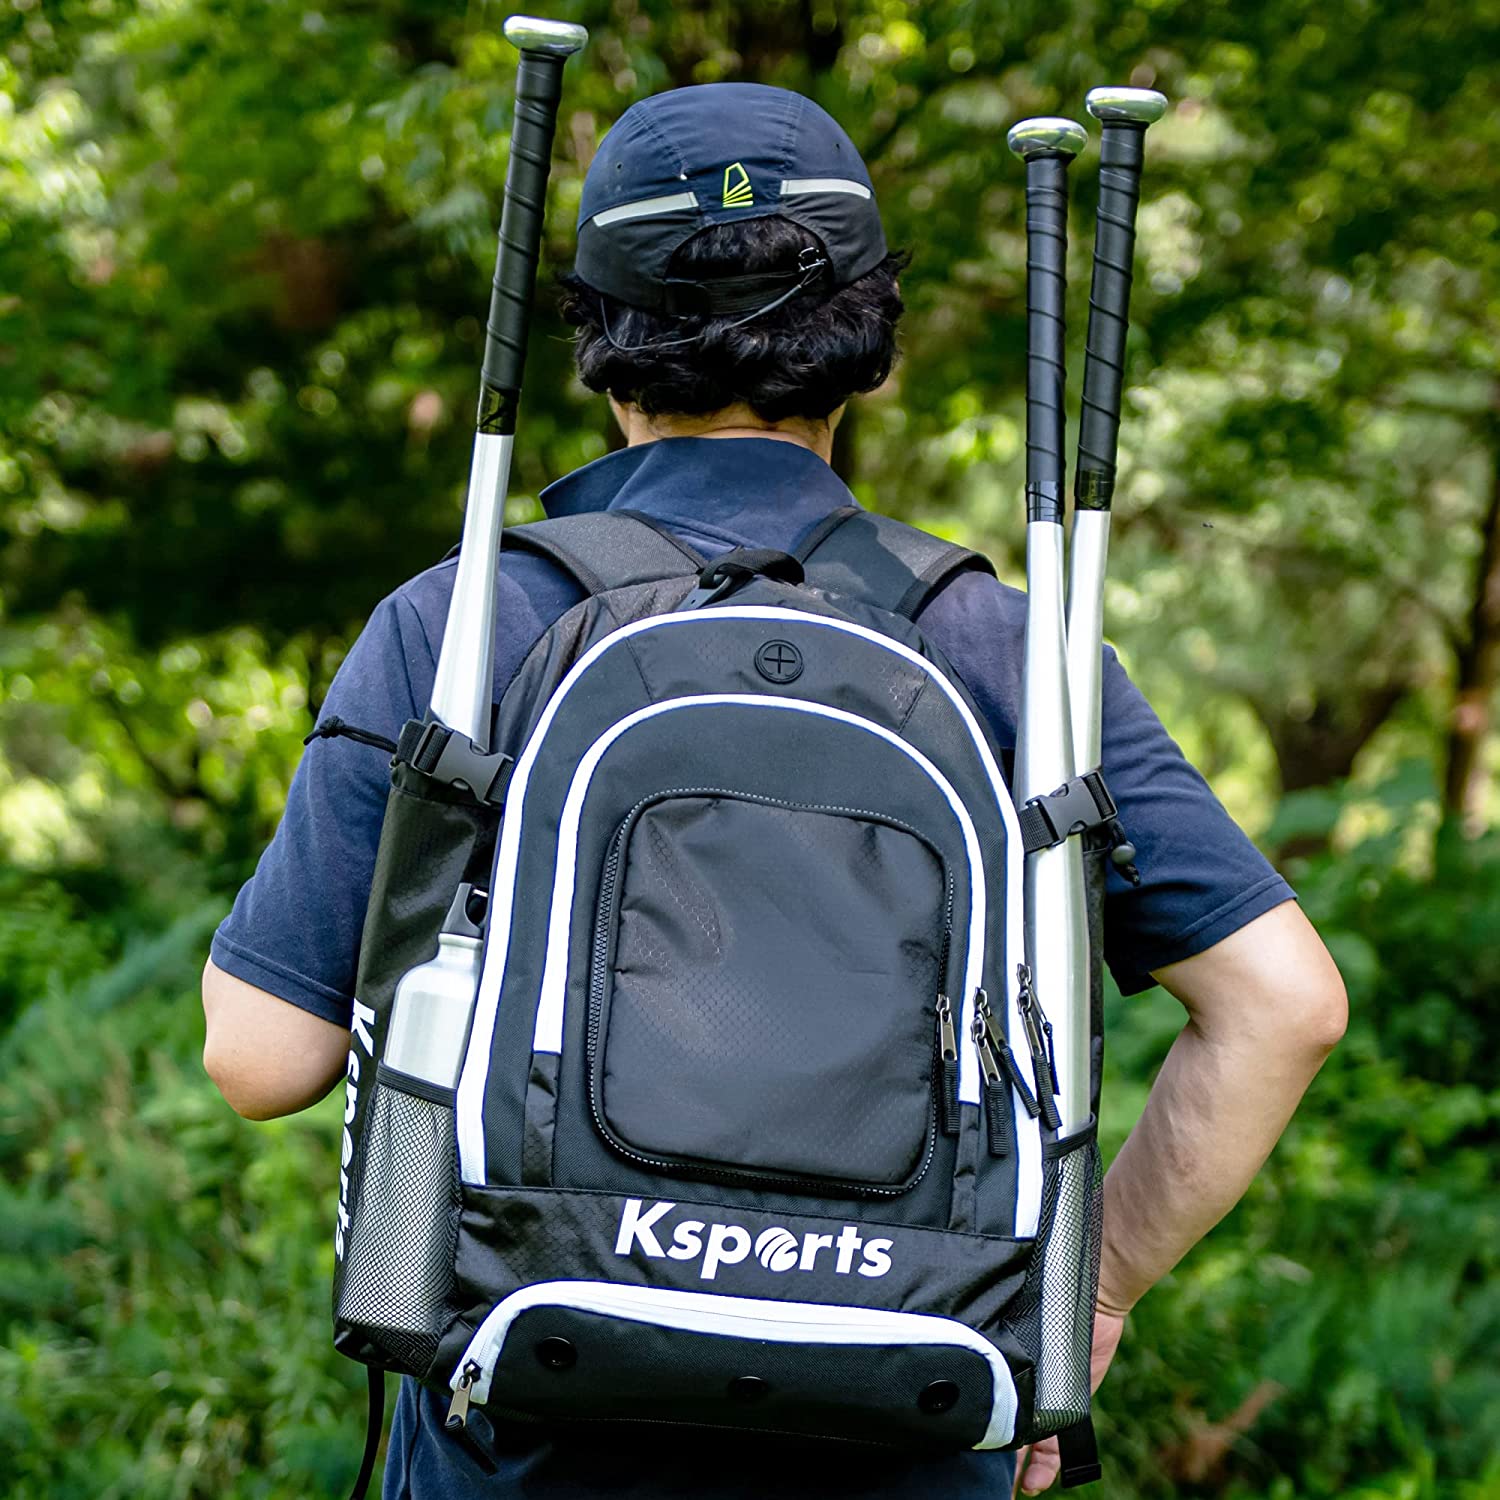 Ksports Baseball Backpack Black with White Zipper (KSU6002)